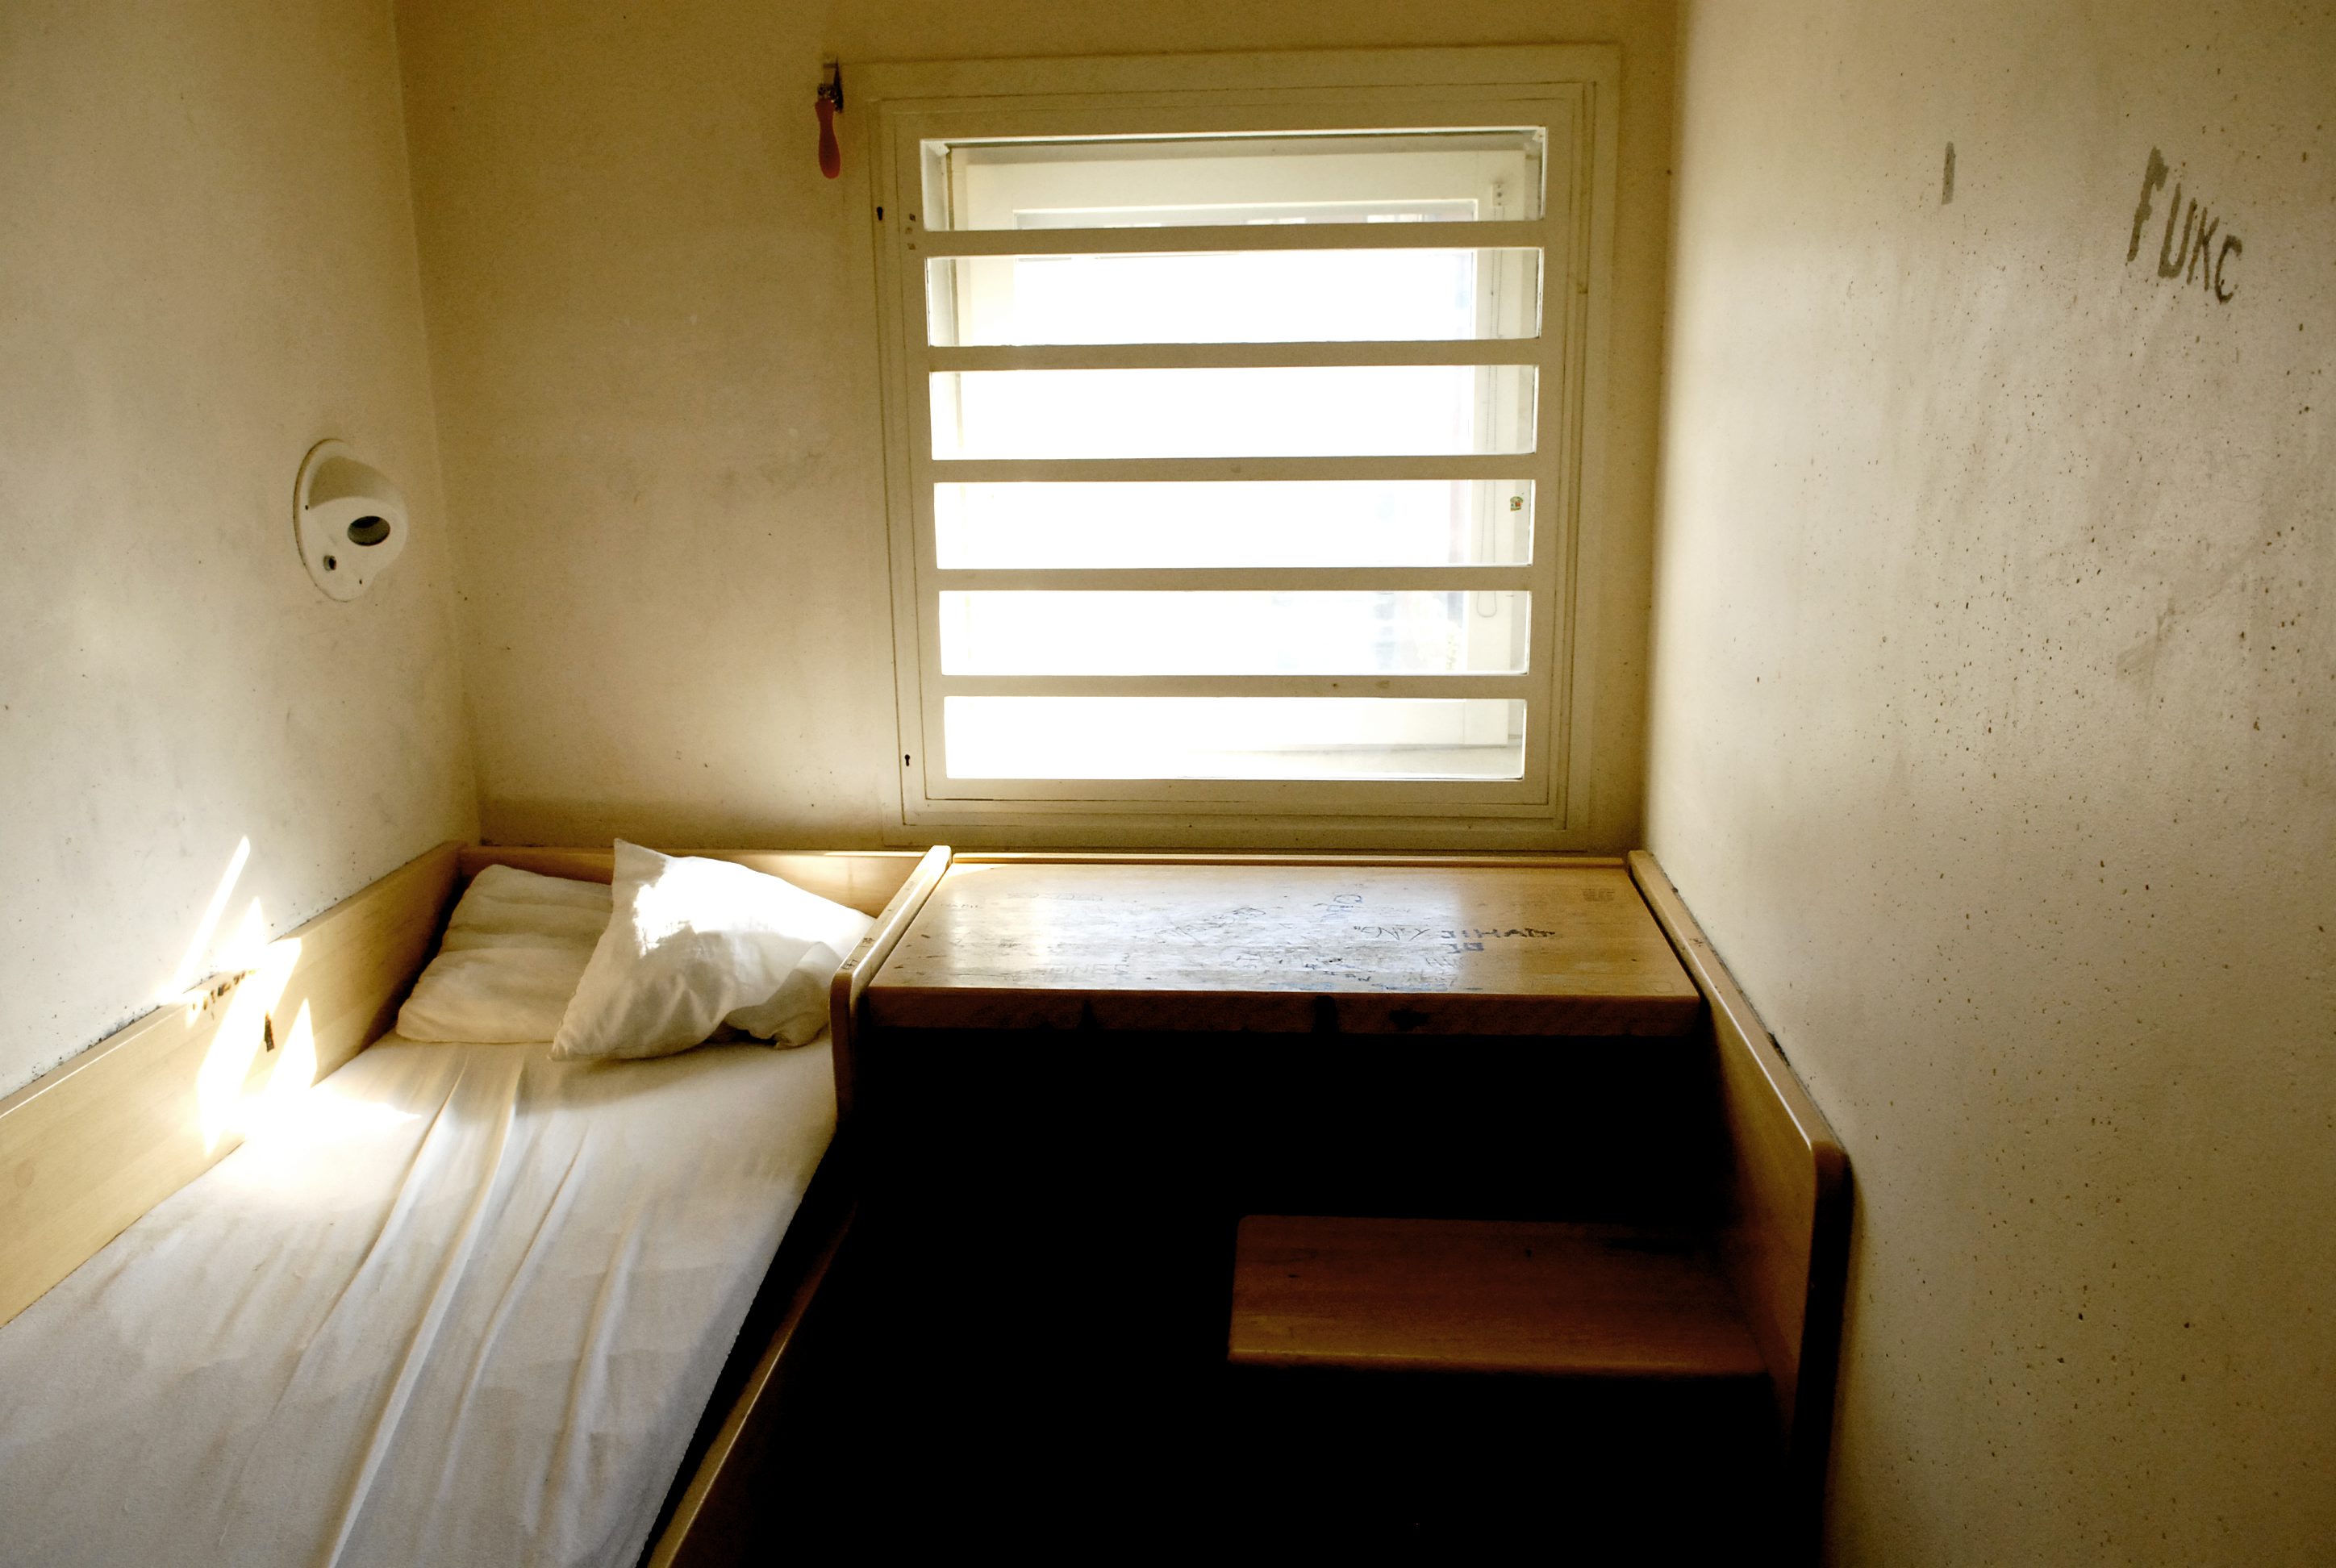 Cell, USA, Häkte, San Diego, Polisen